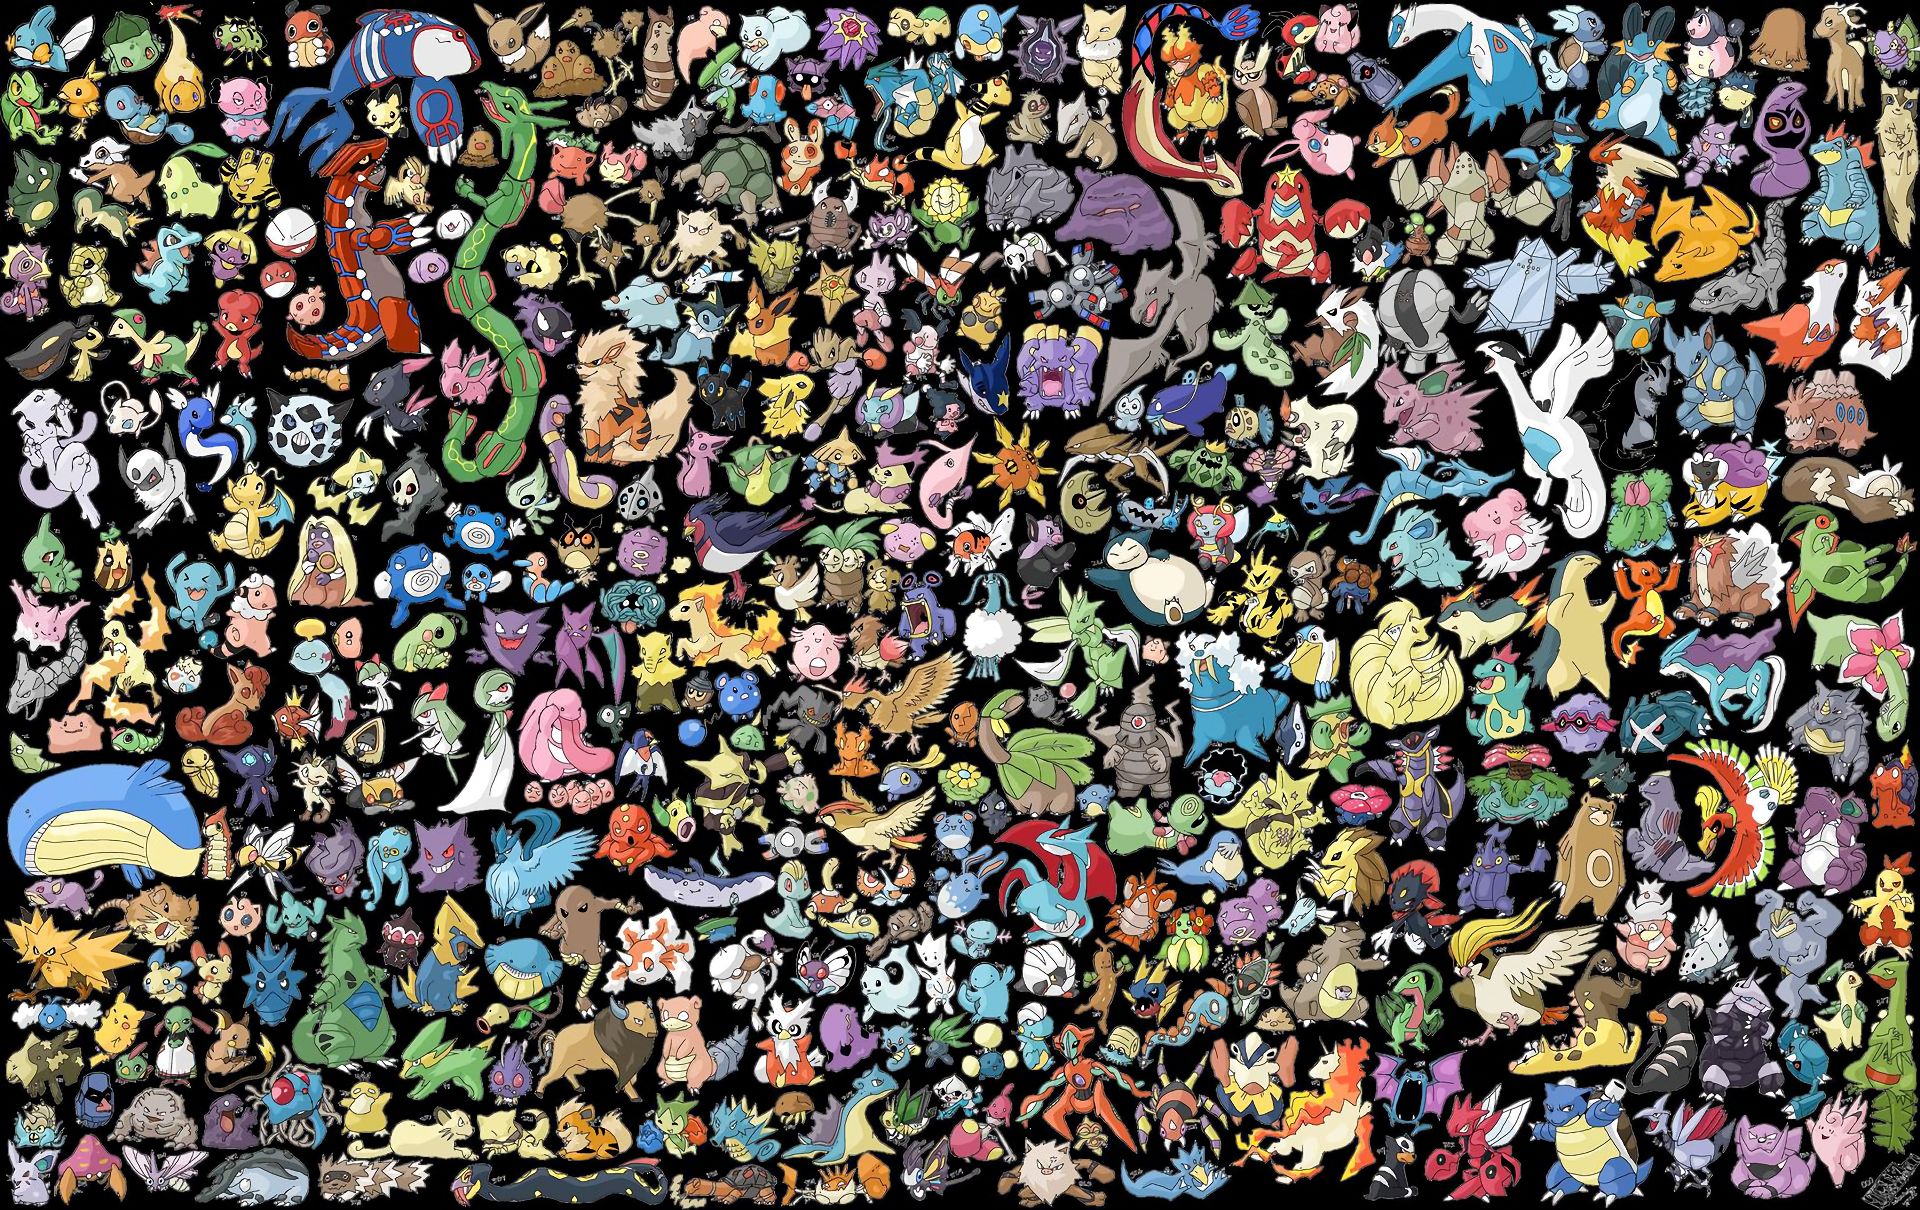 272044 baixar papel de parede pokémon, gengar (pokémon), anime, abra (pokémon), aerodactyl (pokémon), alakazam (pokémon), arbok (pokémon), arcanine (pokémon), articuno (pokémon), beedrill (pokémon), bellsprout (pokémon), blastoise (pokémon), bulbasaur (pokémon), butterfree (pokémon), caterpie (pokémon), chansey (pokémon), charizard (pokémon), charmander (pokémon), charmeleon (pokémon), clefable (pokémon), clefairy (pokémon), cloyster (pokémon), cubone (pokémon), dewgong (pokémon), diglett (pokémon), dito (pokémon), dodrio (pokémon), doduo (pokémon), dragonair (pokémon), dragonite (pokémon), dratini (pokémon), drowzee (pokémon), dugtrio (pokémon), eevee (pokémon), ekans (pokémon), electabuzz (pokémon), eletrodo (pokémon), exeggcute (pokémon), exeggutor (pokémon), farfetch´d (pokémon), fearow (pokémon), flareon (pokémon), gastly (pokémon), geodude (pokémon), gloom (pokémon), golbat (pokémon), golden (pokémon), golduck (pokémon), golem (pokémon), graveler (pokémon), grimer (pokémon), growlithe (pokémon), gyarados (pokémon), haunter (pokémon), hitmonchan (pokémon), hitmonlee (pokémon), horsea (pokémon), hypno (pokémon), ivysaur (pokémon), jigglypuff (pokémon), jolteon (pokémon), jynx (pokémon), kabuto (pokémon), kabutops (pokémon), kadabra (pokémon), kakuna (pokémon), kangaskhan (pokémon), kingler (pokémon), koffing (pokémon), krabby (pokémon), lapras (pokémon), lickitung (pokémon), machamp (pokémon), machoke (pokémon), machop (pokémon), magikarp (pokémon), magmar (pokémon), magnemite (pokémon), magneton (pokémon), mankey (pokémon), marowak (pokémon), meowth (pokémon), metapod (pokémon), mew (pokémon), mewtwo (pokémon), moltres (pokémon), mr mime (pokémon), muk (pokémon), nidoking (pokémon), nidoqueen (pokémon), nidoran (pokémon), nidorina (pokémon), nidorino (pokémon), ninetales (pokémon), oddish (pokémon), omanyte (pokémon), omastar (pokémon), onix (pokémon), paras (pokémon), parasita (pokémon), persa (pokémon), pidgeot (pokémon), pidgeotto (pokémon), pidgey (pokémon), pikachu, pinsir (pokémon), poliwag (pokémon), poliwhirl (pokémon), poliwrath (pokémon), ponyta (pokémon), porygon (pokémon), primeape (pokémon), psyduck (pokémon), raichu (pokémon), rapidash (pokémon), raticate (pokémon), rattata (pokémon), rhydon (pokémon), rhyhorn (pokémon), sandshrew (pokémon), sandslash (pokémon), scyther (pokémon), seadra (pokémon), seaking (pokémon), seel (pokémon), shellder (pokémon), slowbro (pokémon), slowpoke (pokémon), snorlax (pokémon), spearow (pokémon), squirtle (pokémon), starmie (pokémon), staryu (pokémon), tangela (pokémon), tauros (pokémon), tentacool (pokémon), tentacruel (pokémon), vaporeon (pokémon), venomoth (pokémon), venonat (pokémon), venusaur (pokémon), victreebel (pokémon), vileplume (pokémon), voltorb (pokémon), vulpix (pokémon), wartortle (pokémon), weedle (pokémon), weepinbell (pokémon), weezing (pokémon), wigglytuff (pokémon), zapdos (pokémon), zubat (pokémon) - protetores de tela e imagens gratuitamente